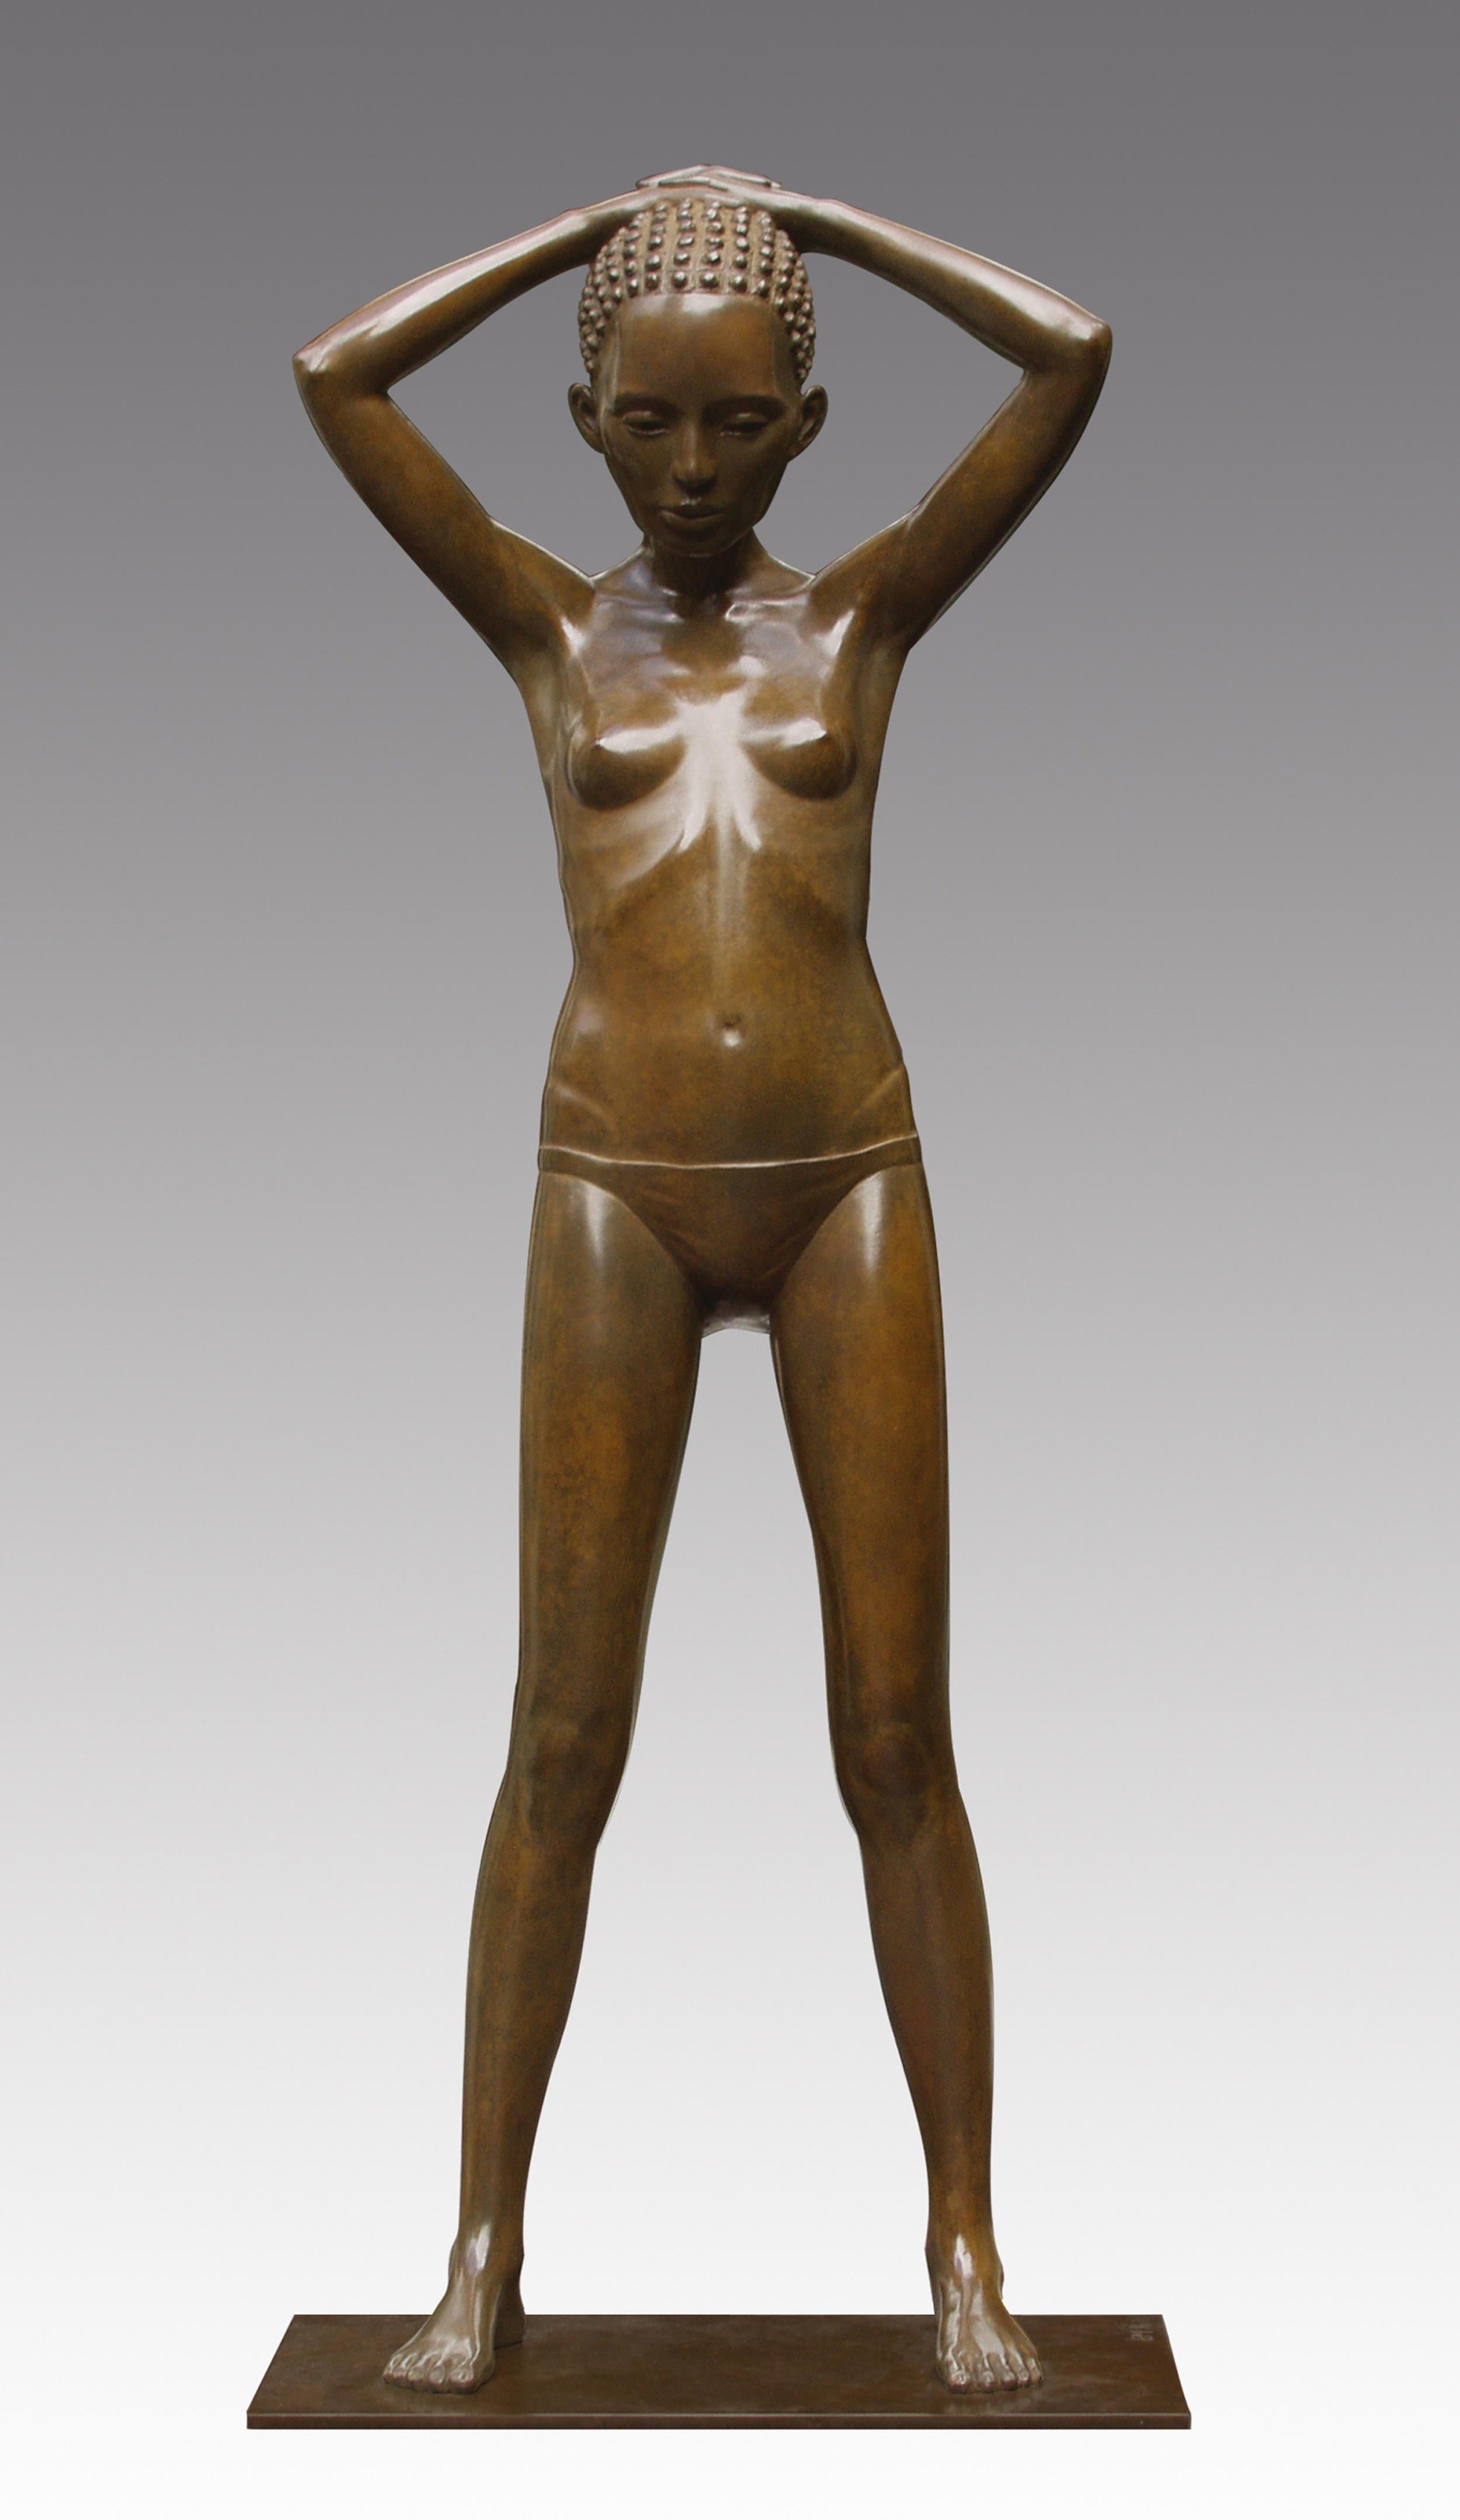 Erwin Meijer Figurative Sculpture - Model II Bronze Sculpture Nude Girl Standing Female Figure Contemporary